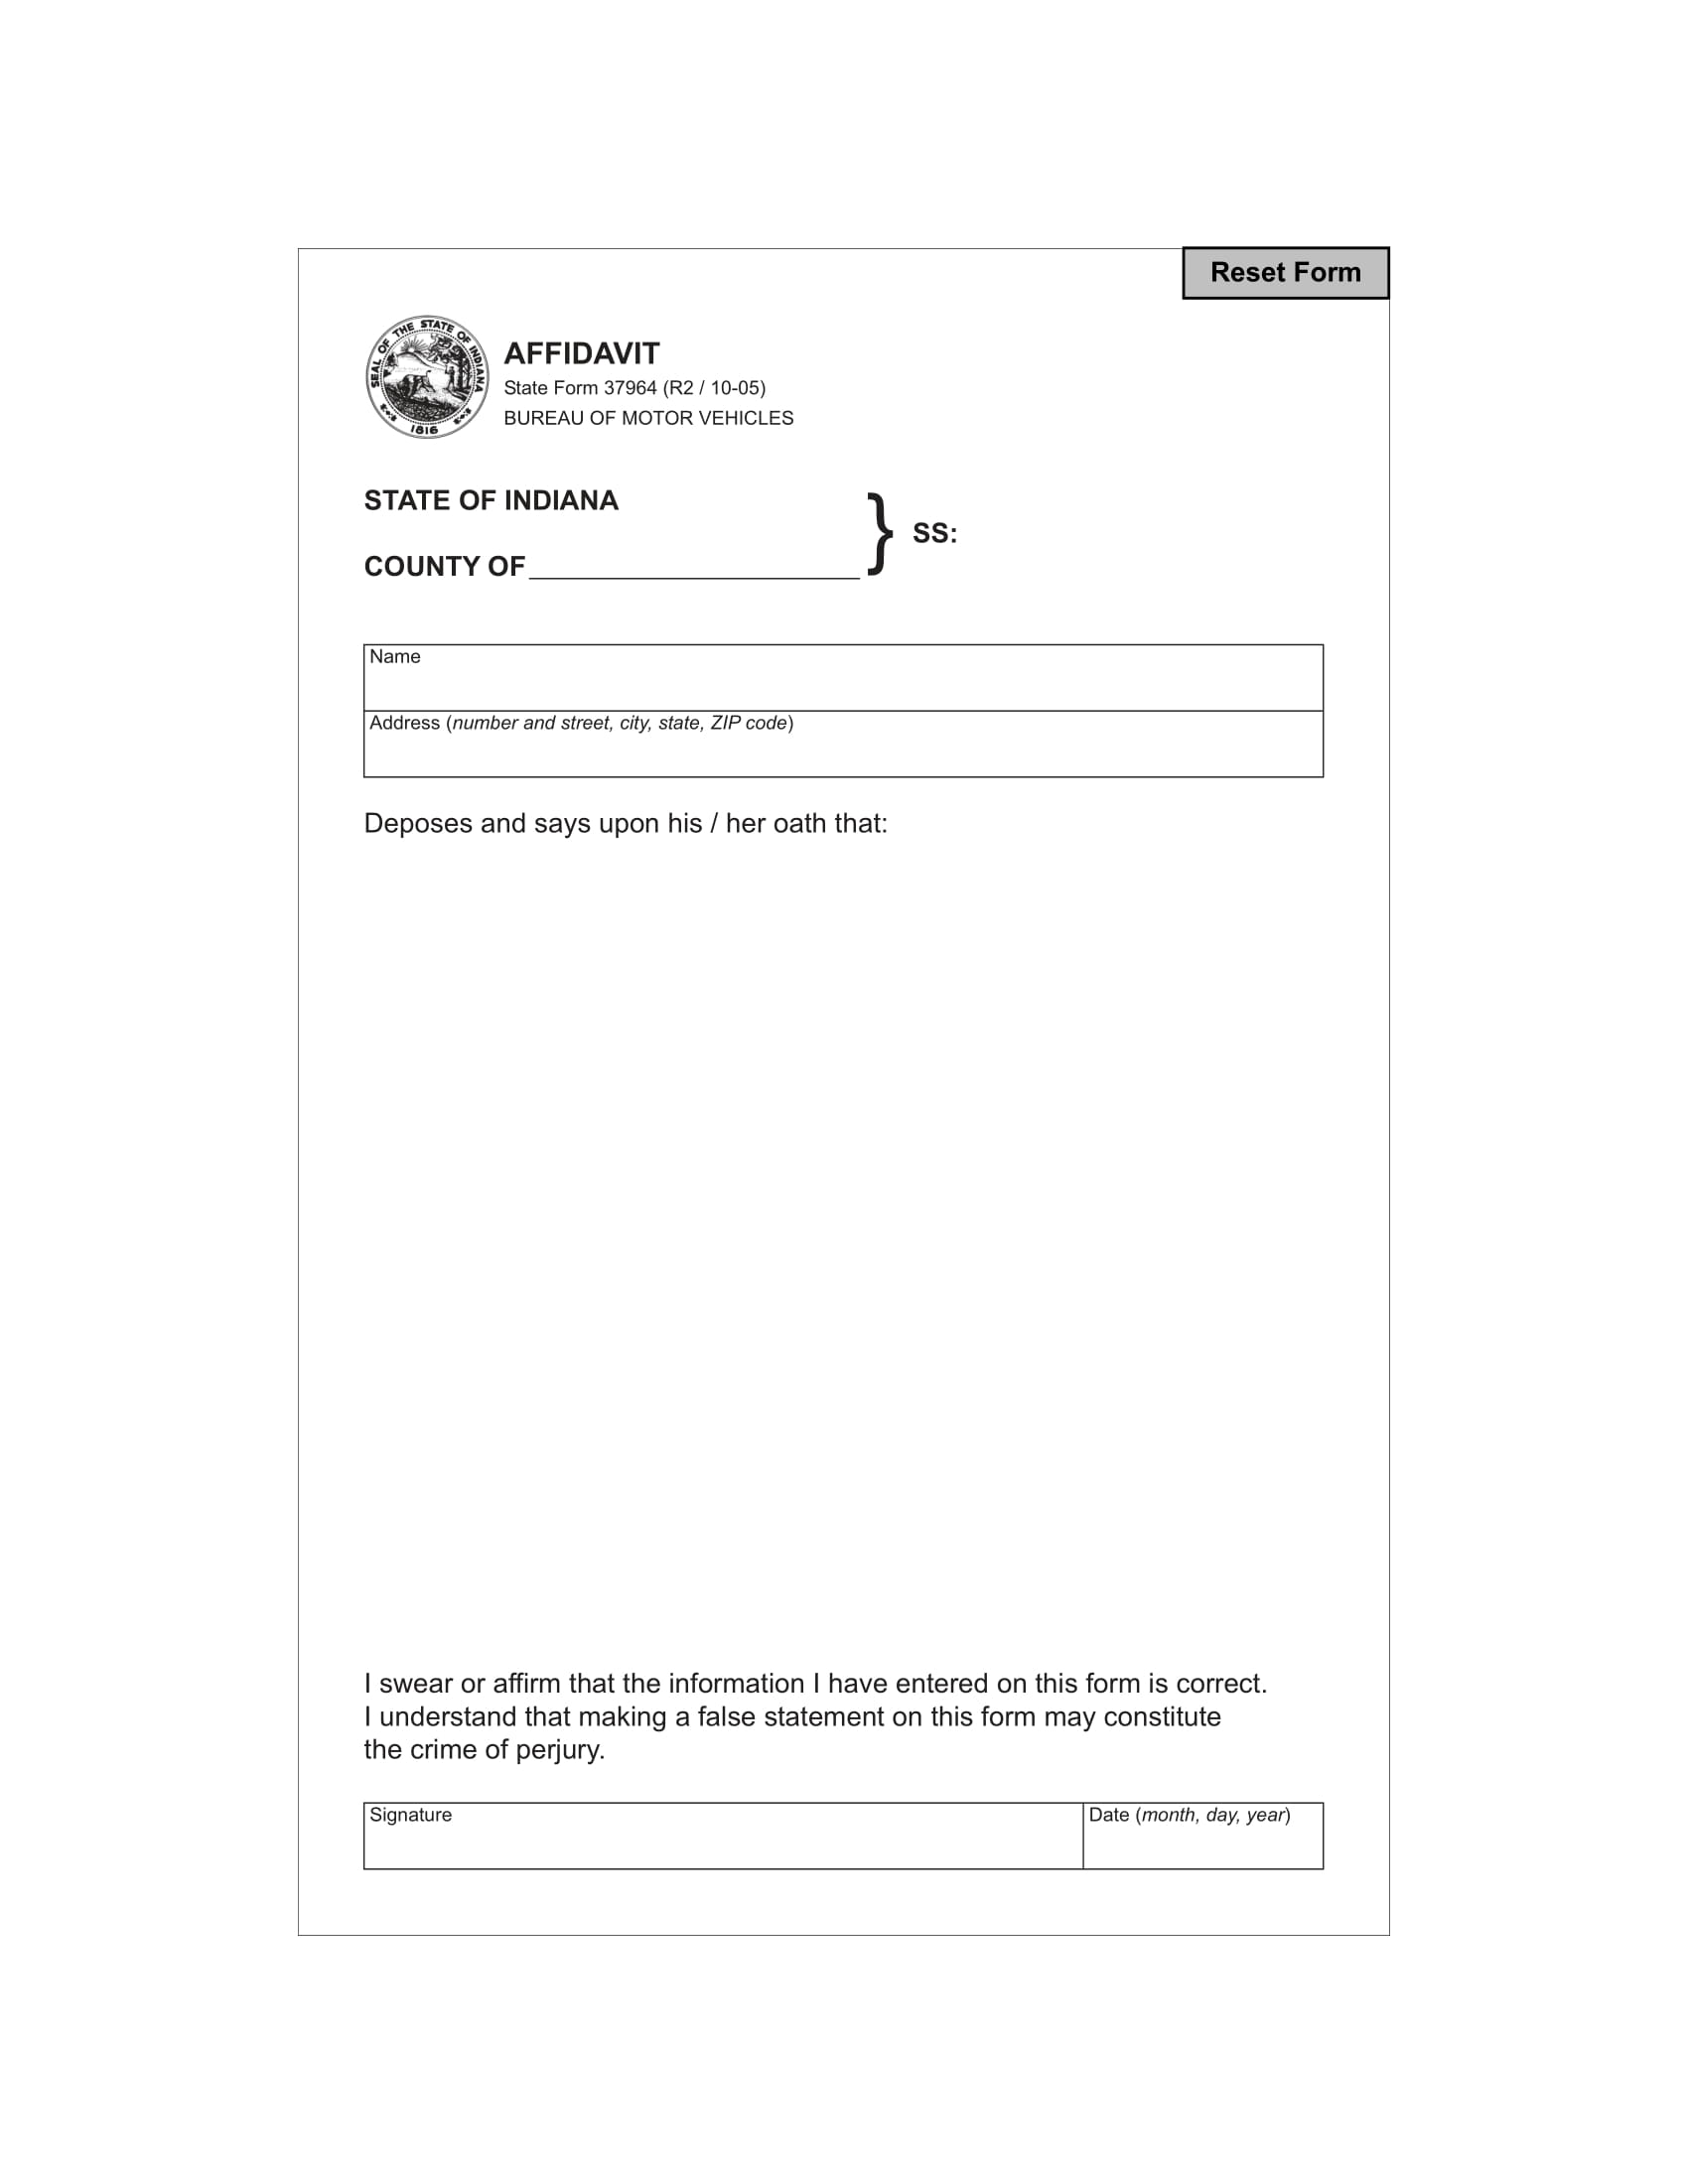 printable-pdf-affidavit-form-printable-forms-free-online